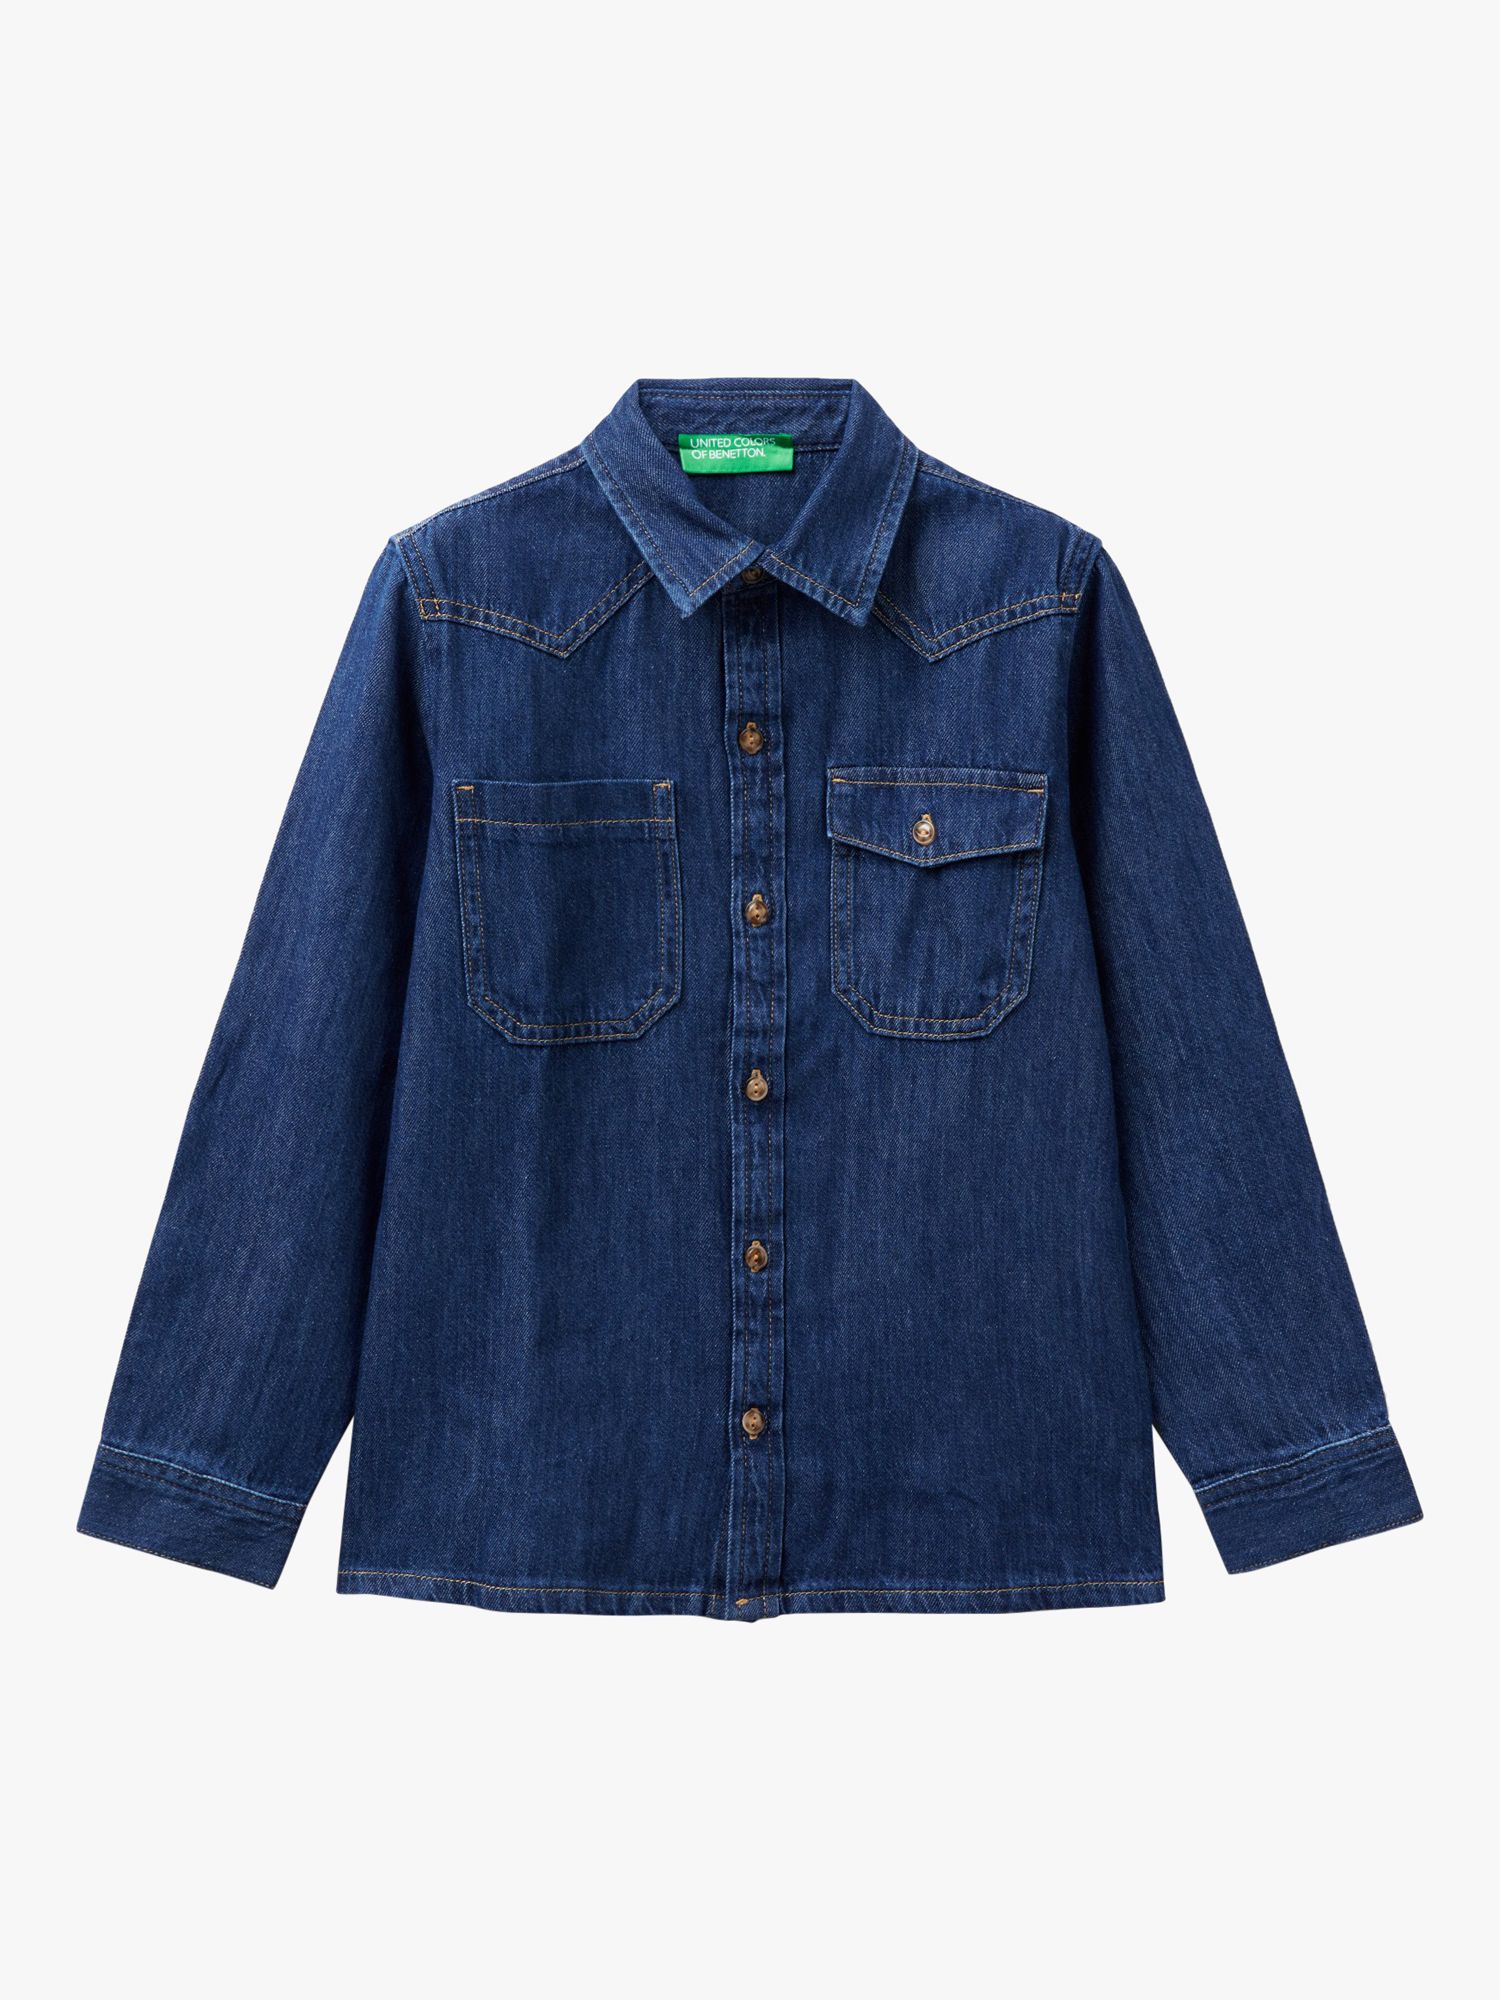 Benetton Kids' Classic Denim Long Sleeve Shirt, Medium Blue, 8-9 years